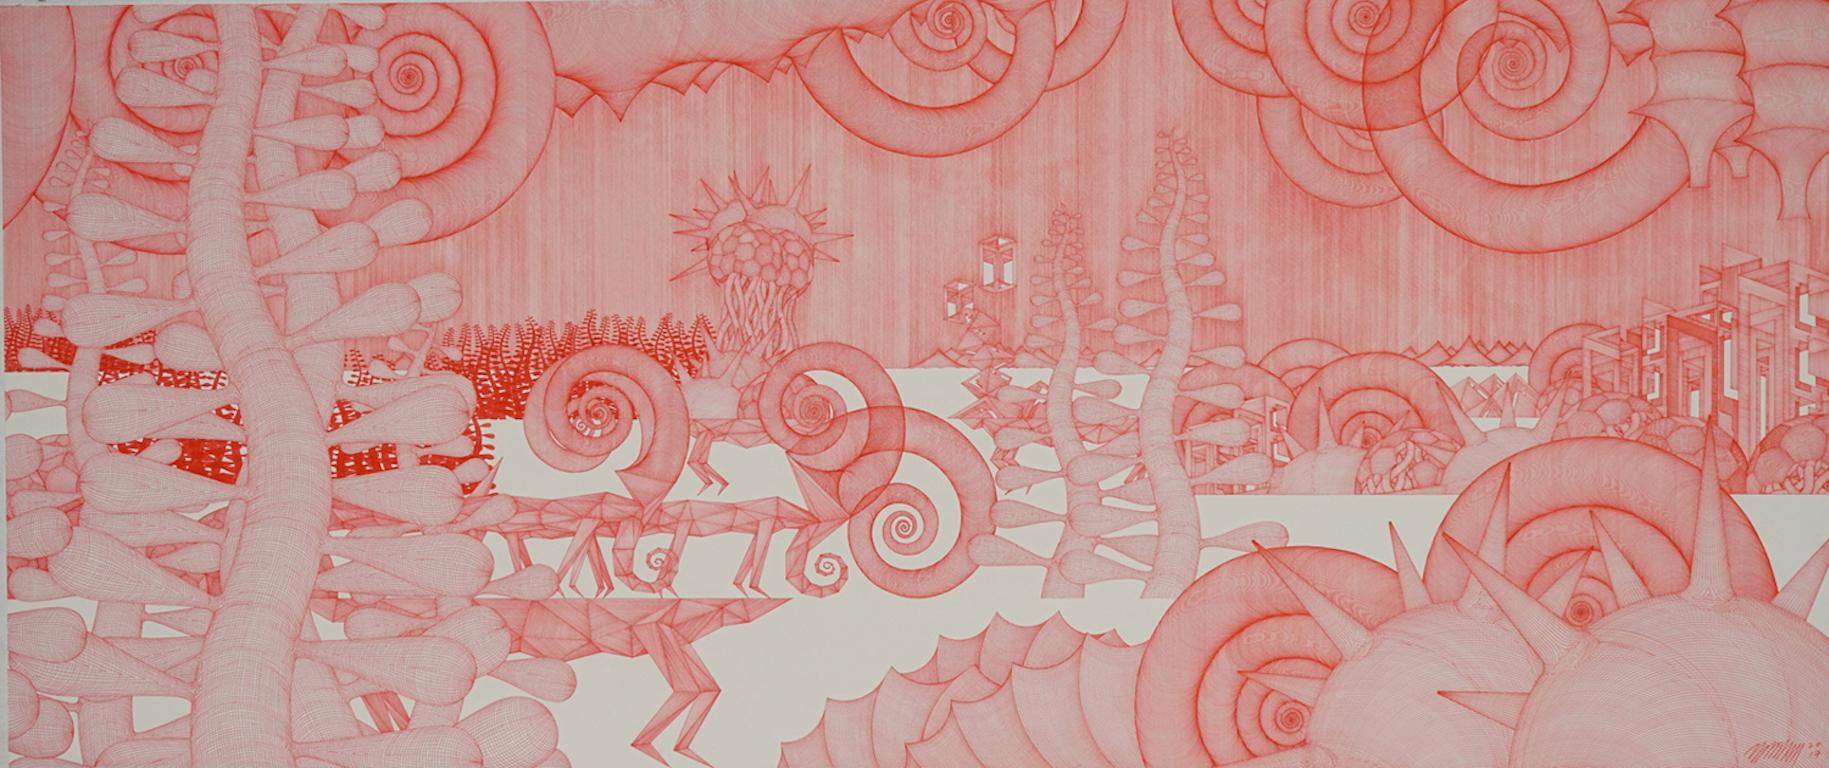 Cheolyu Kim Abstract Drawing - Journey #27 (monochrome red pen drawing wood detailed oriental dansaekhwa)